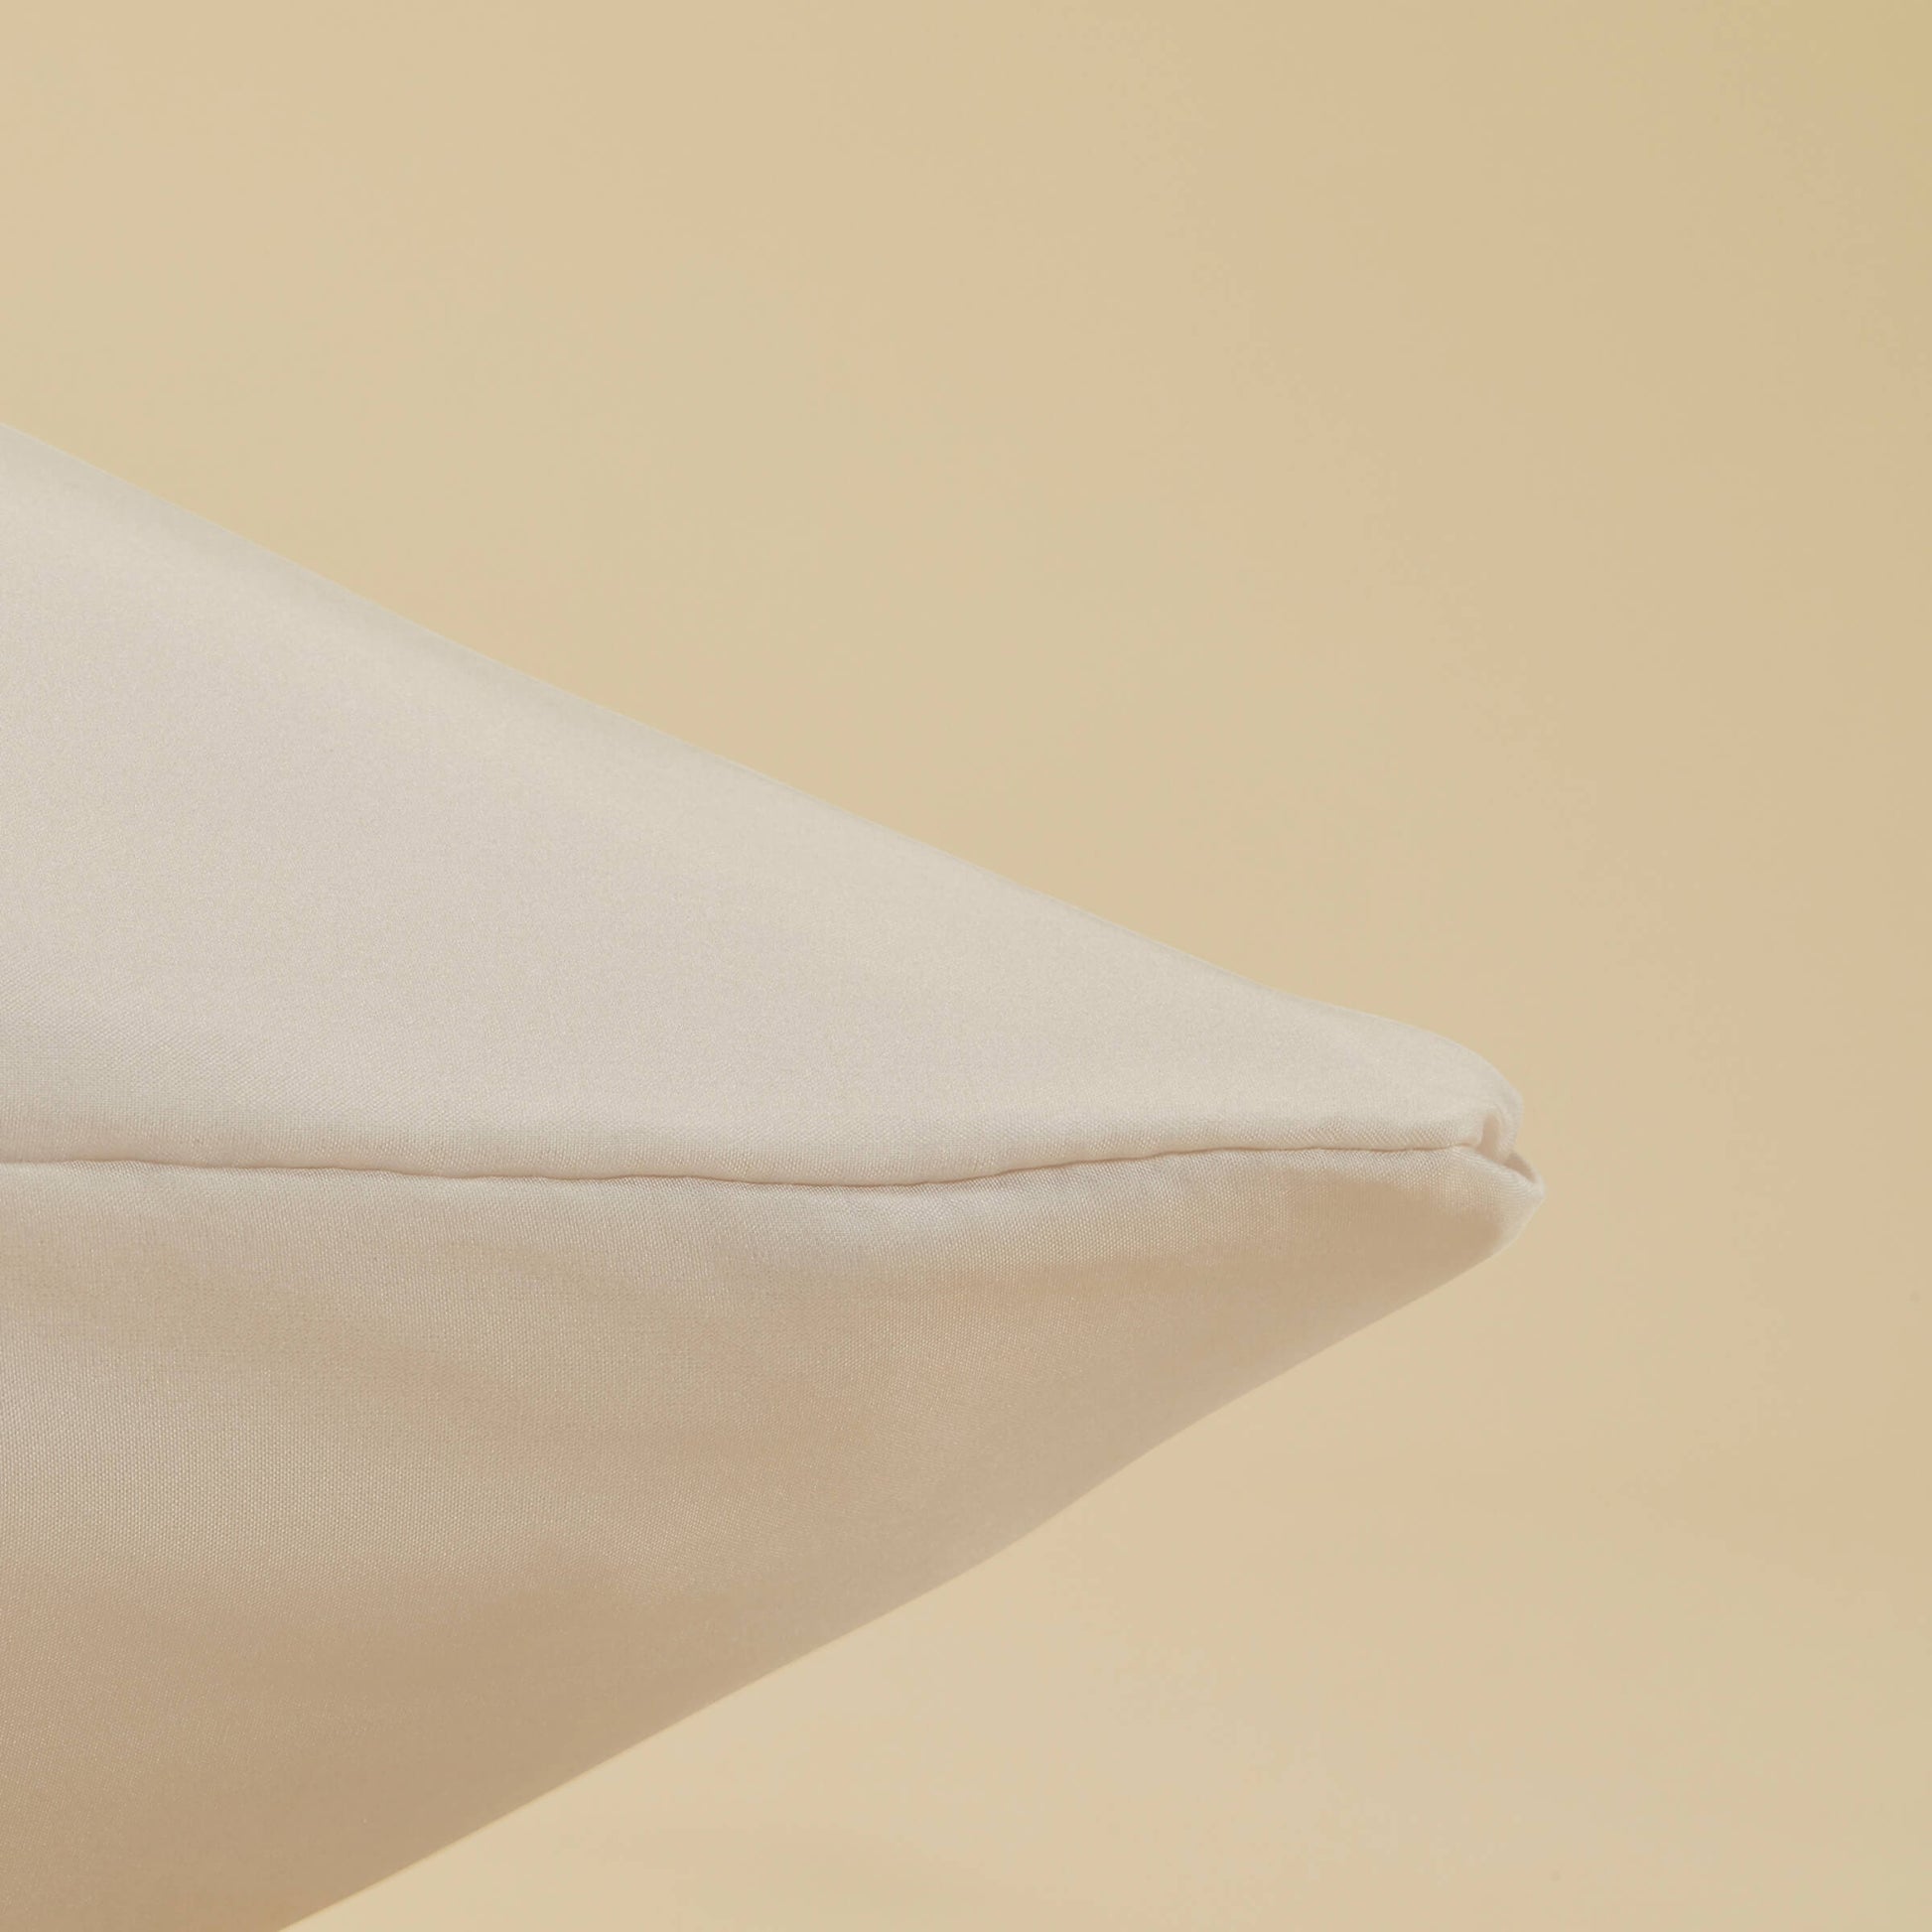 A detailed shot of the Slumber Cloud Silk Pillowcase